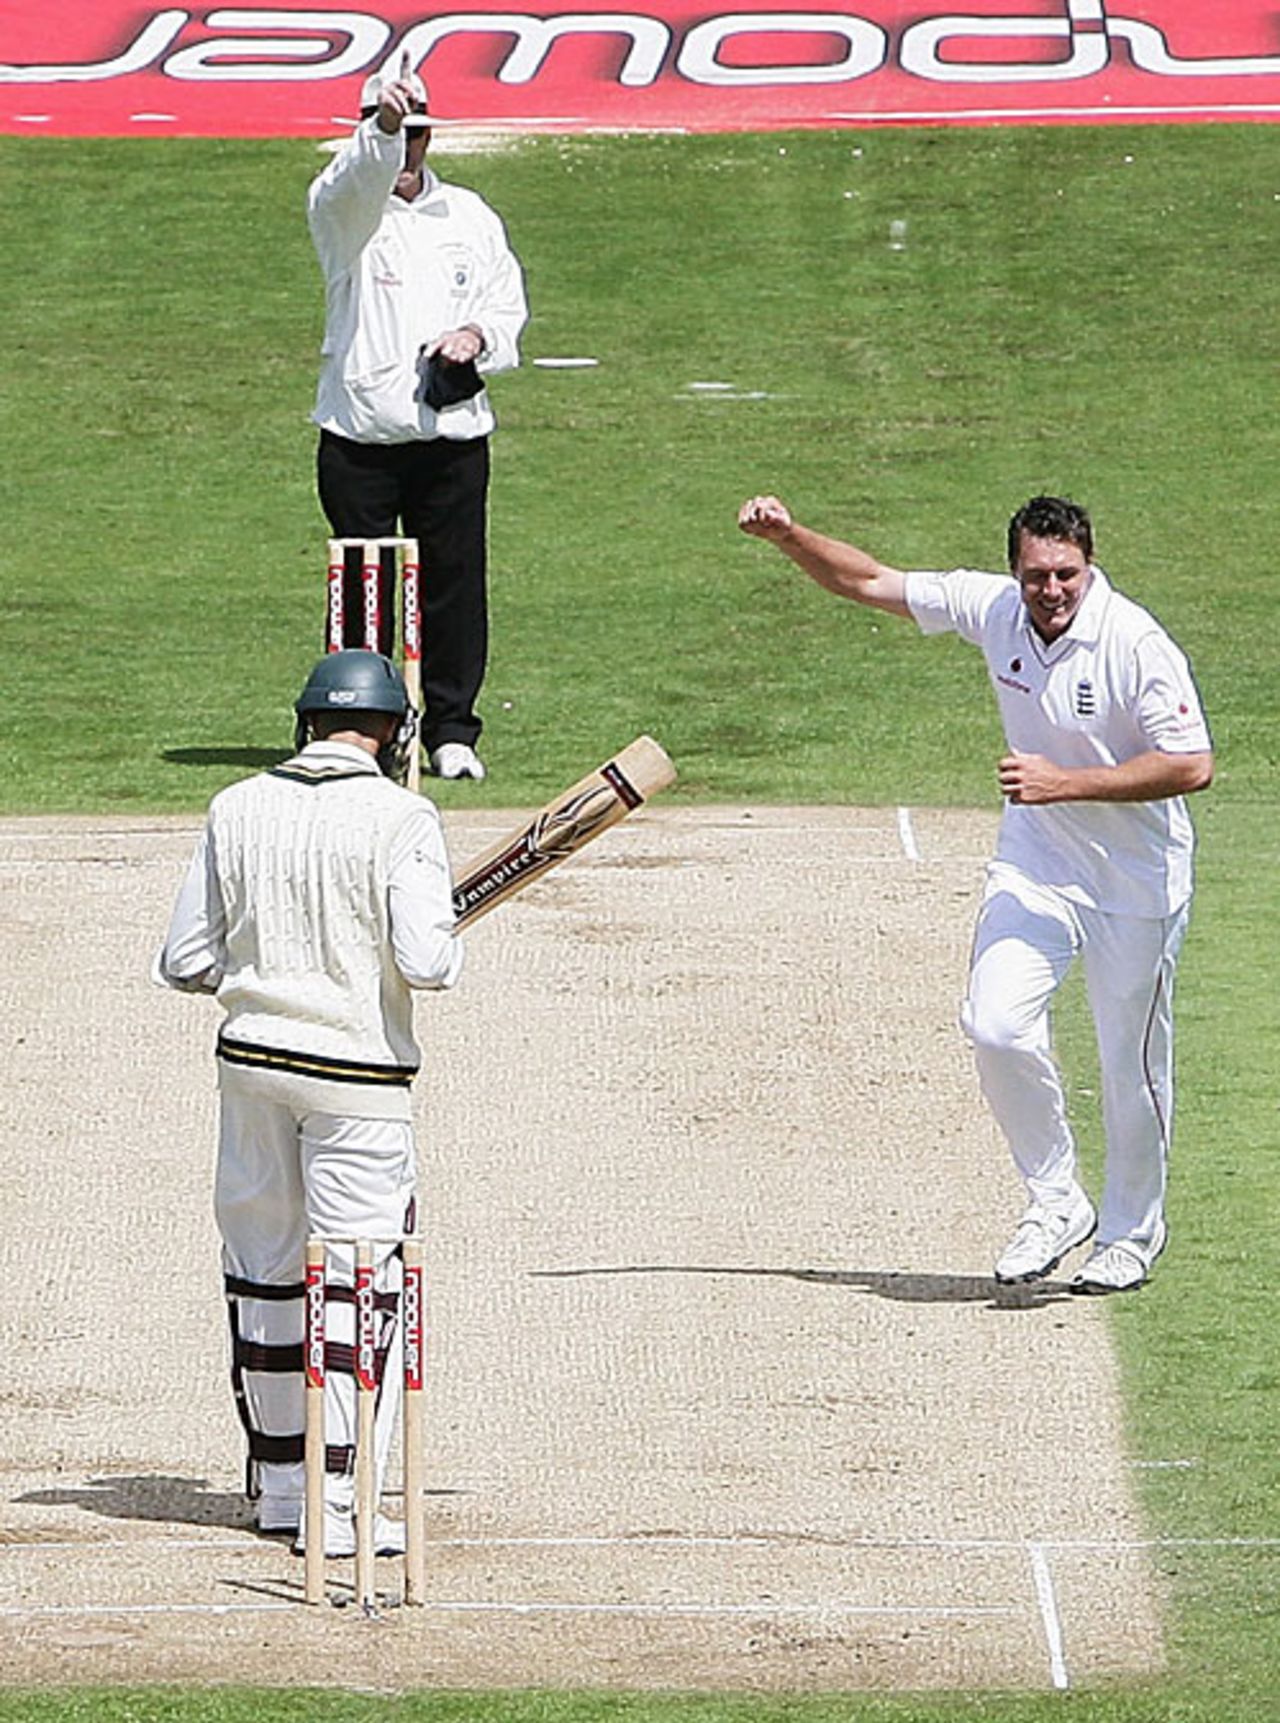 Darren Pattinson celebrates his maiden Test wicket, that of Hashim Amla, England v South Africa, 2nd Test, Headingley, July 19, 2008